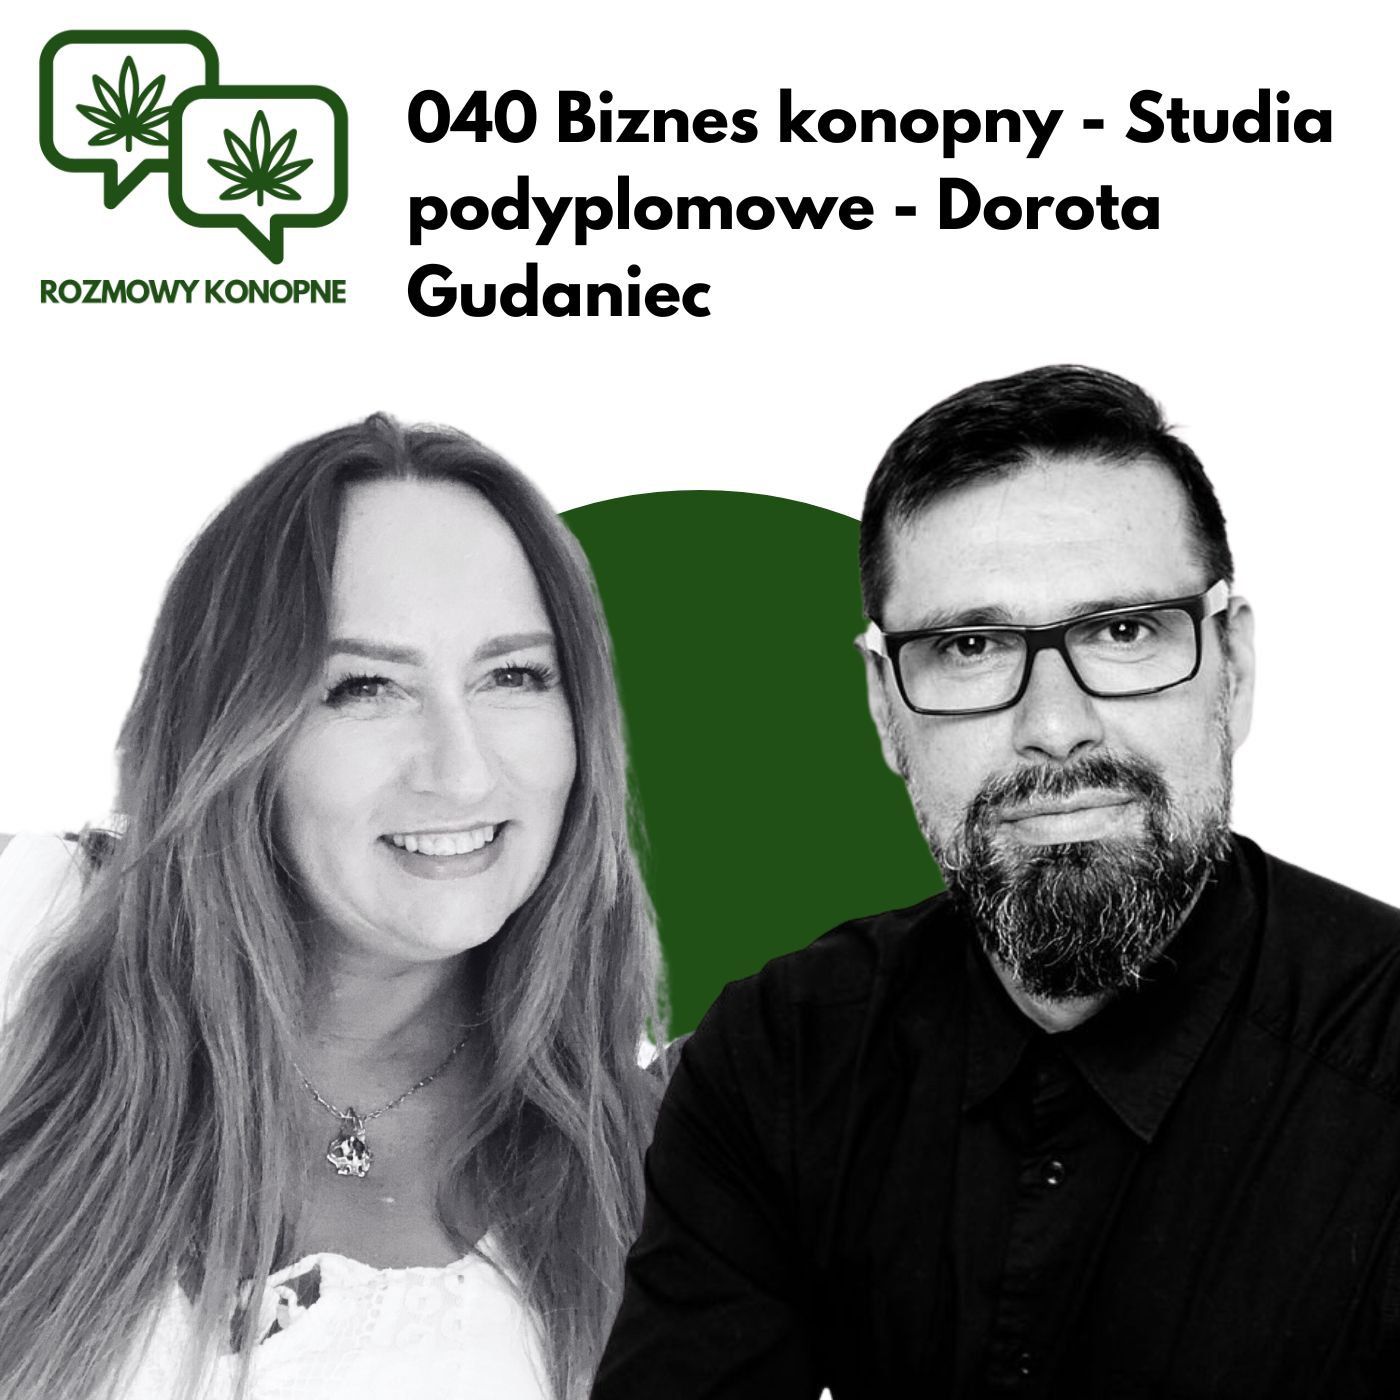 040 Biznes konopny - Studia podyplomowe - Dorota Gudaniec